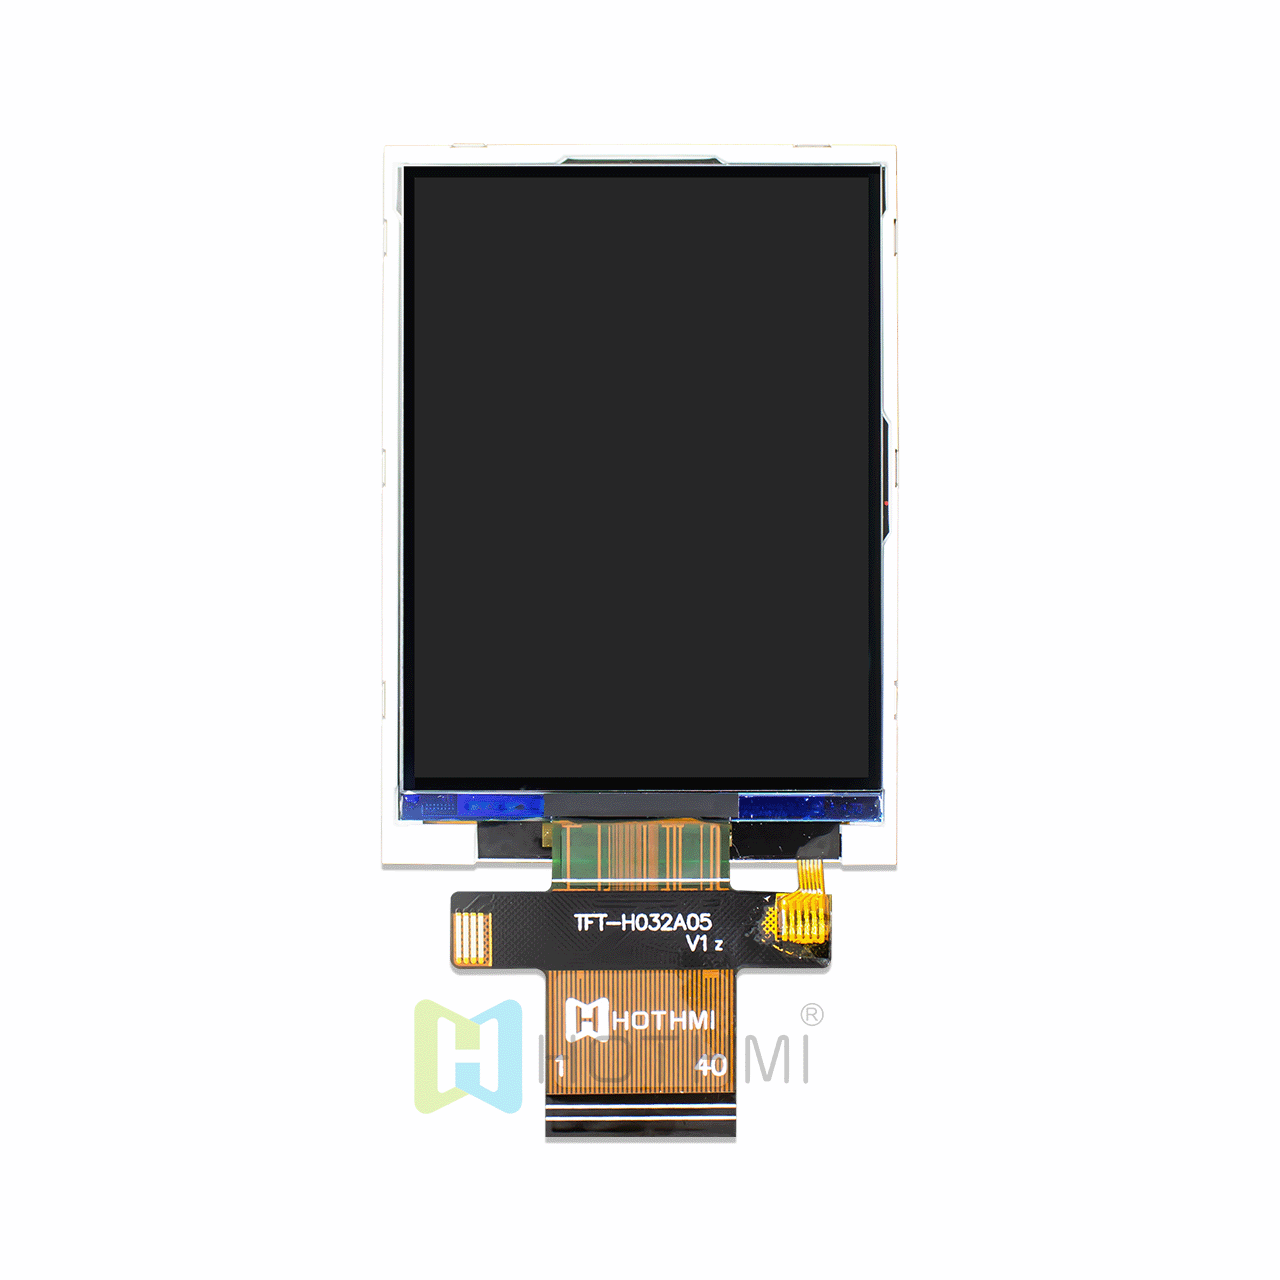 3.2寸TFT液晶显示模块/240x320点阵彩屏模组/SPI接口/ST7789 兼容 Android